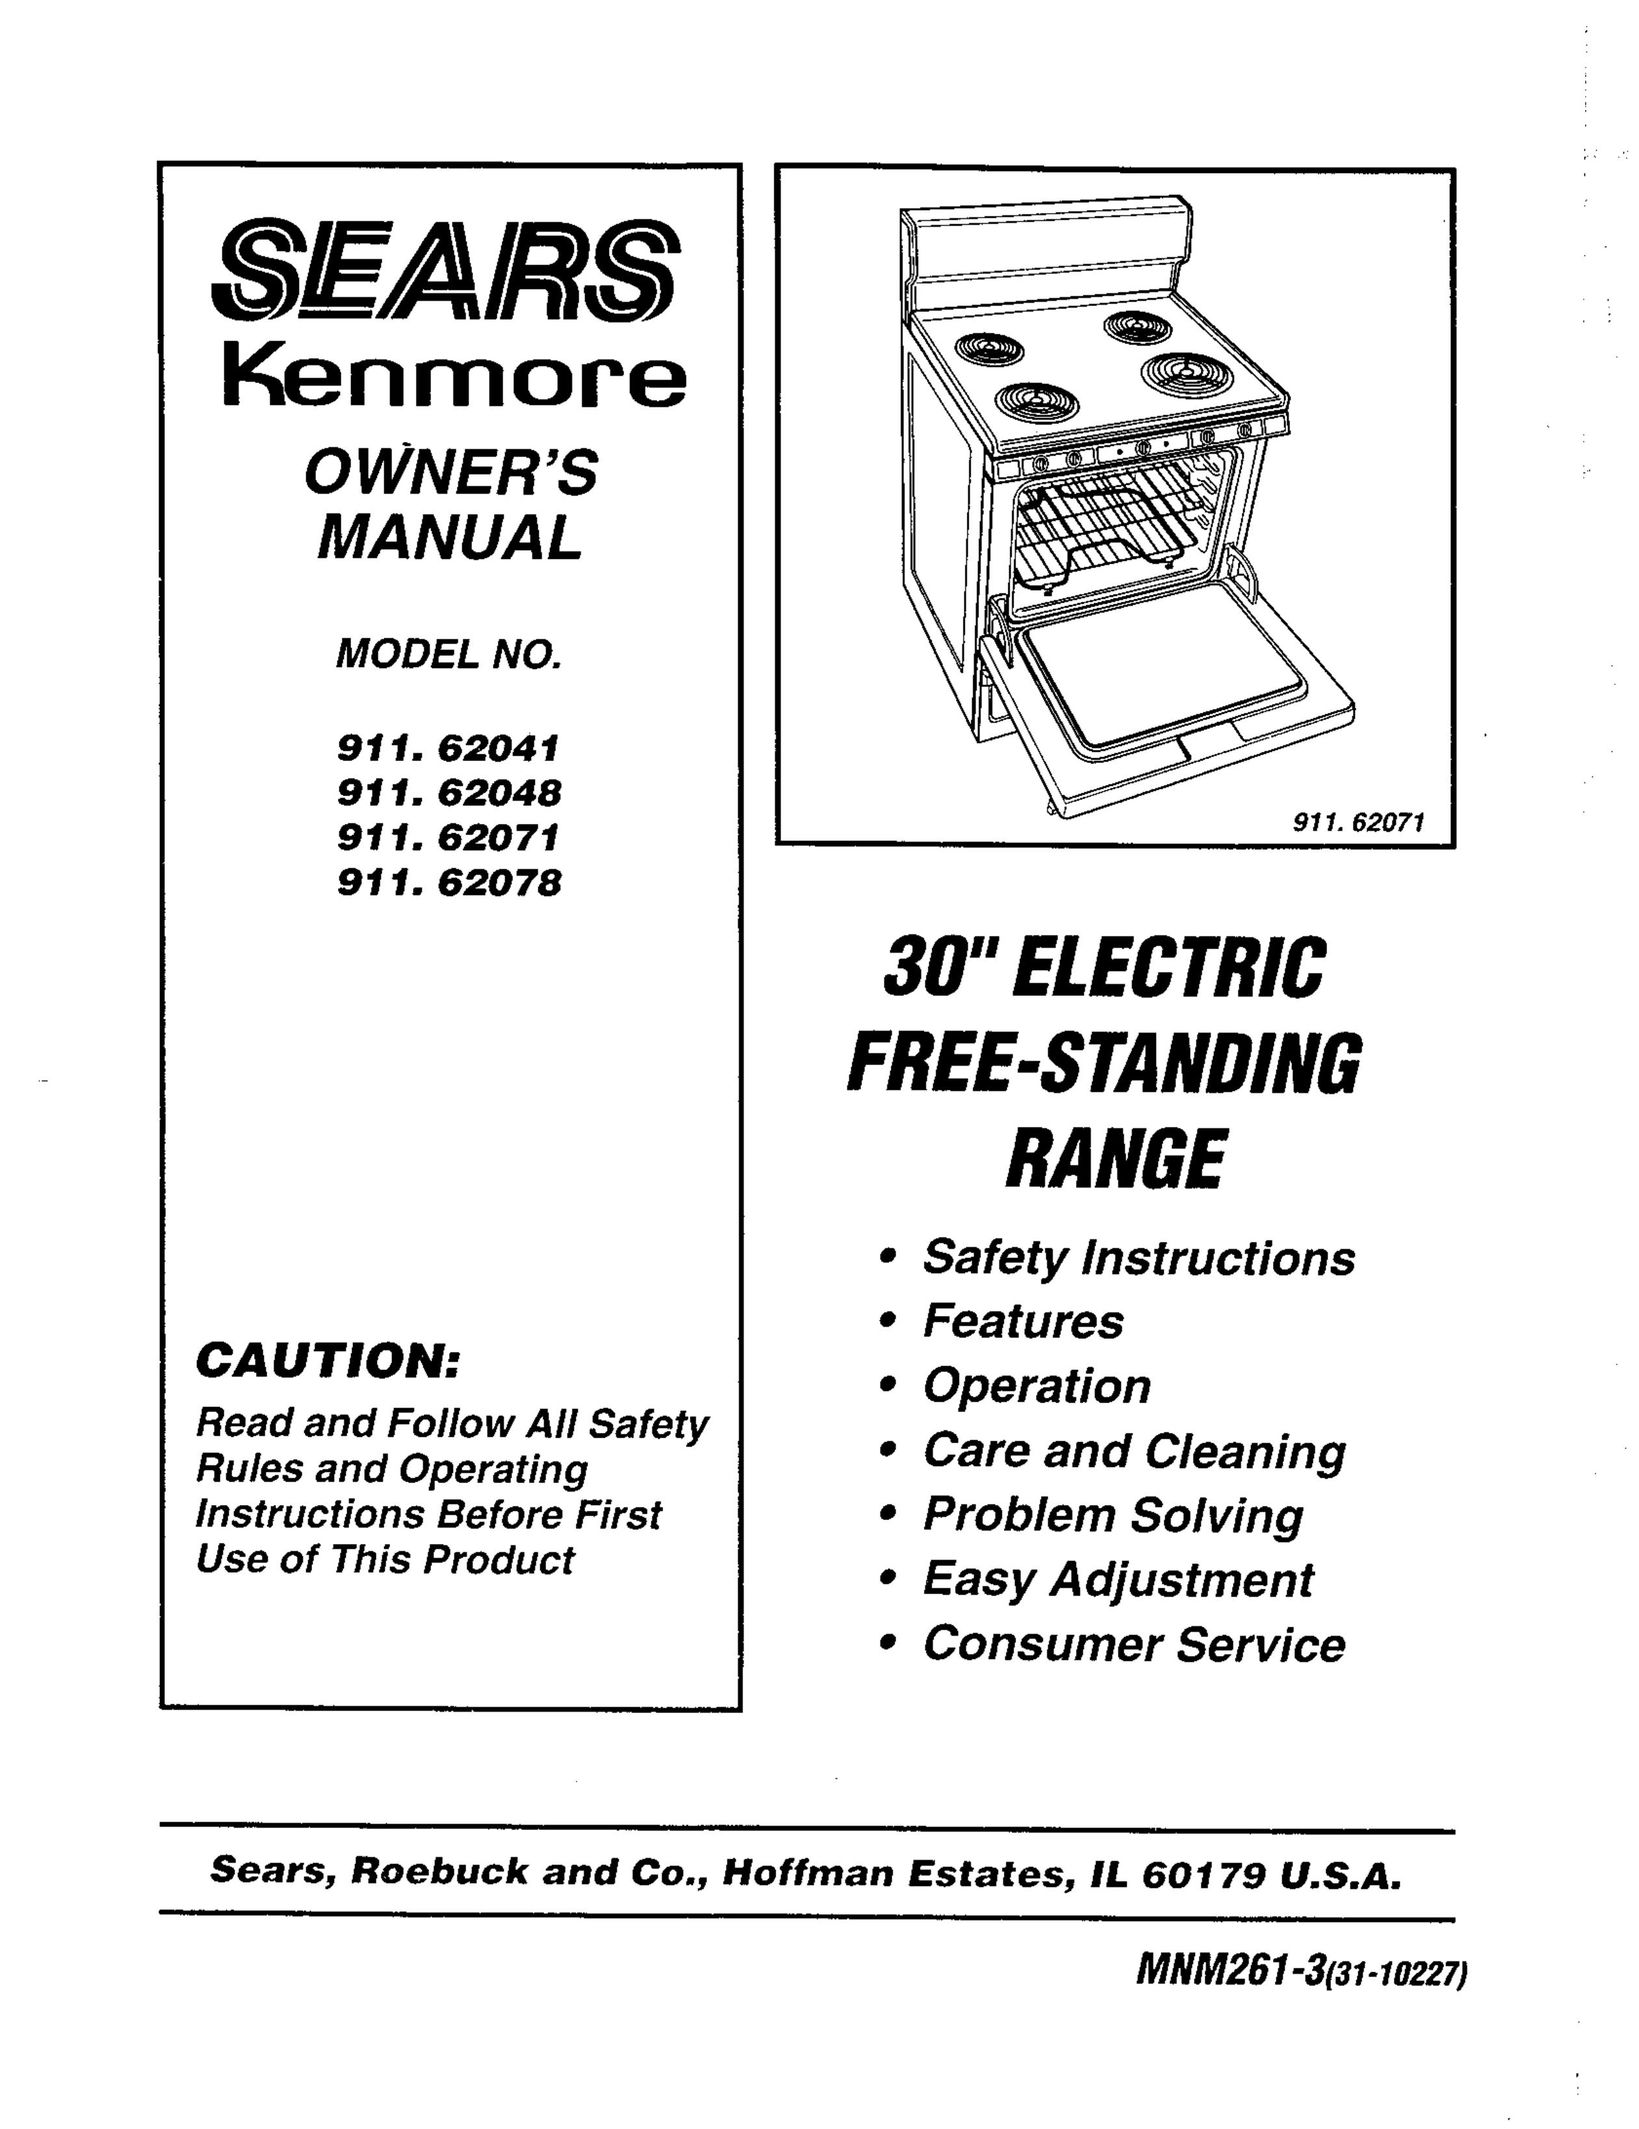 Sears 911. 62071 Oven User Manual